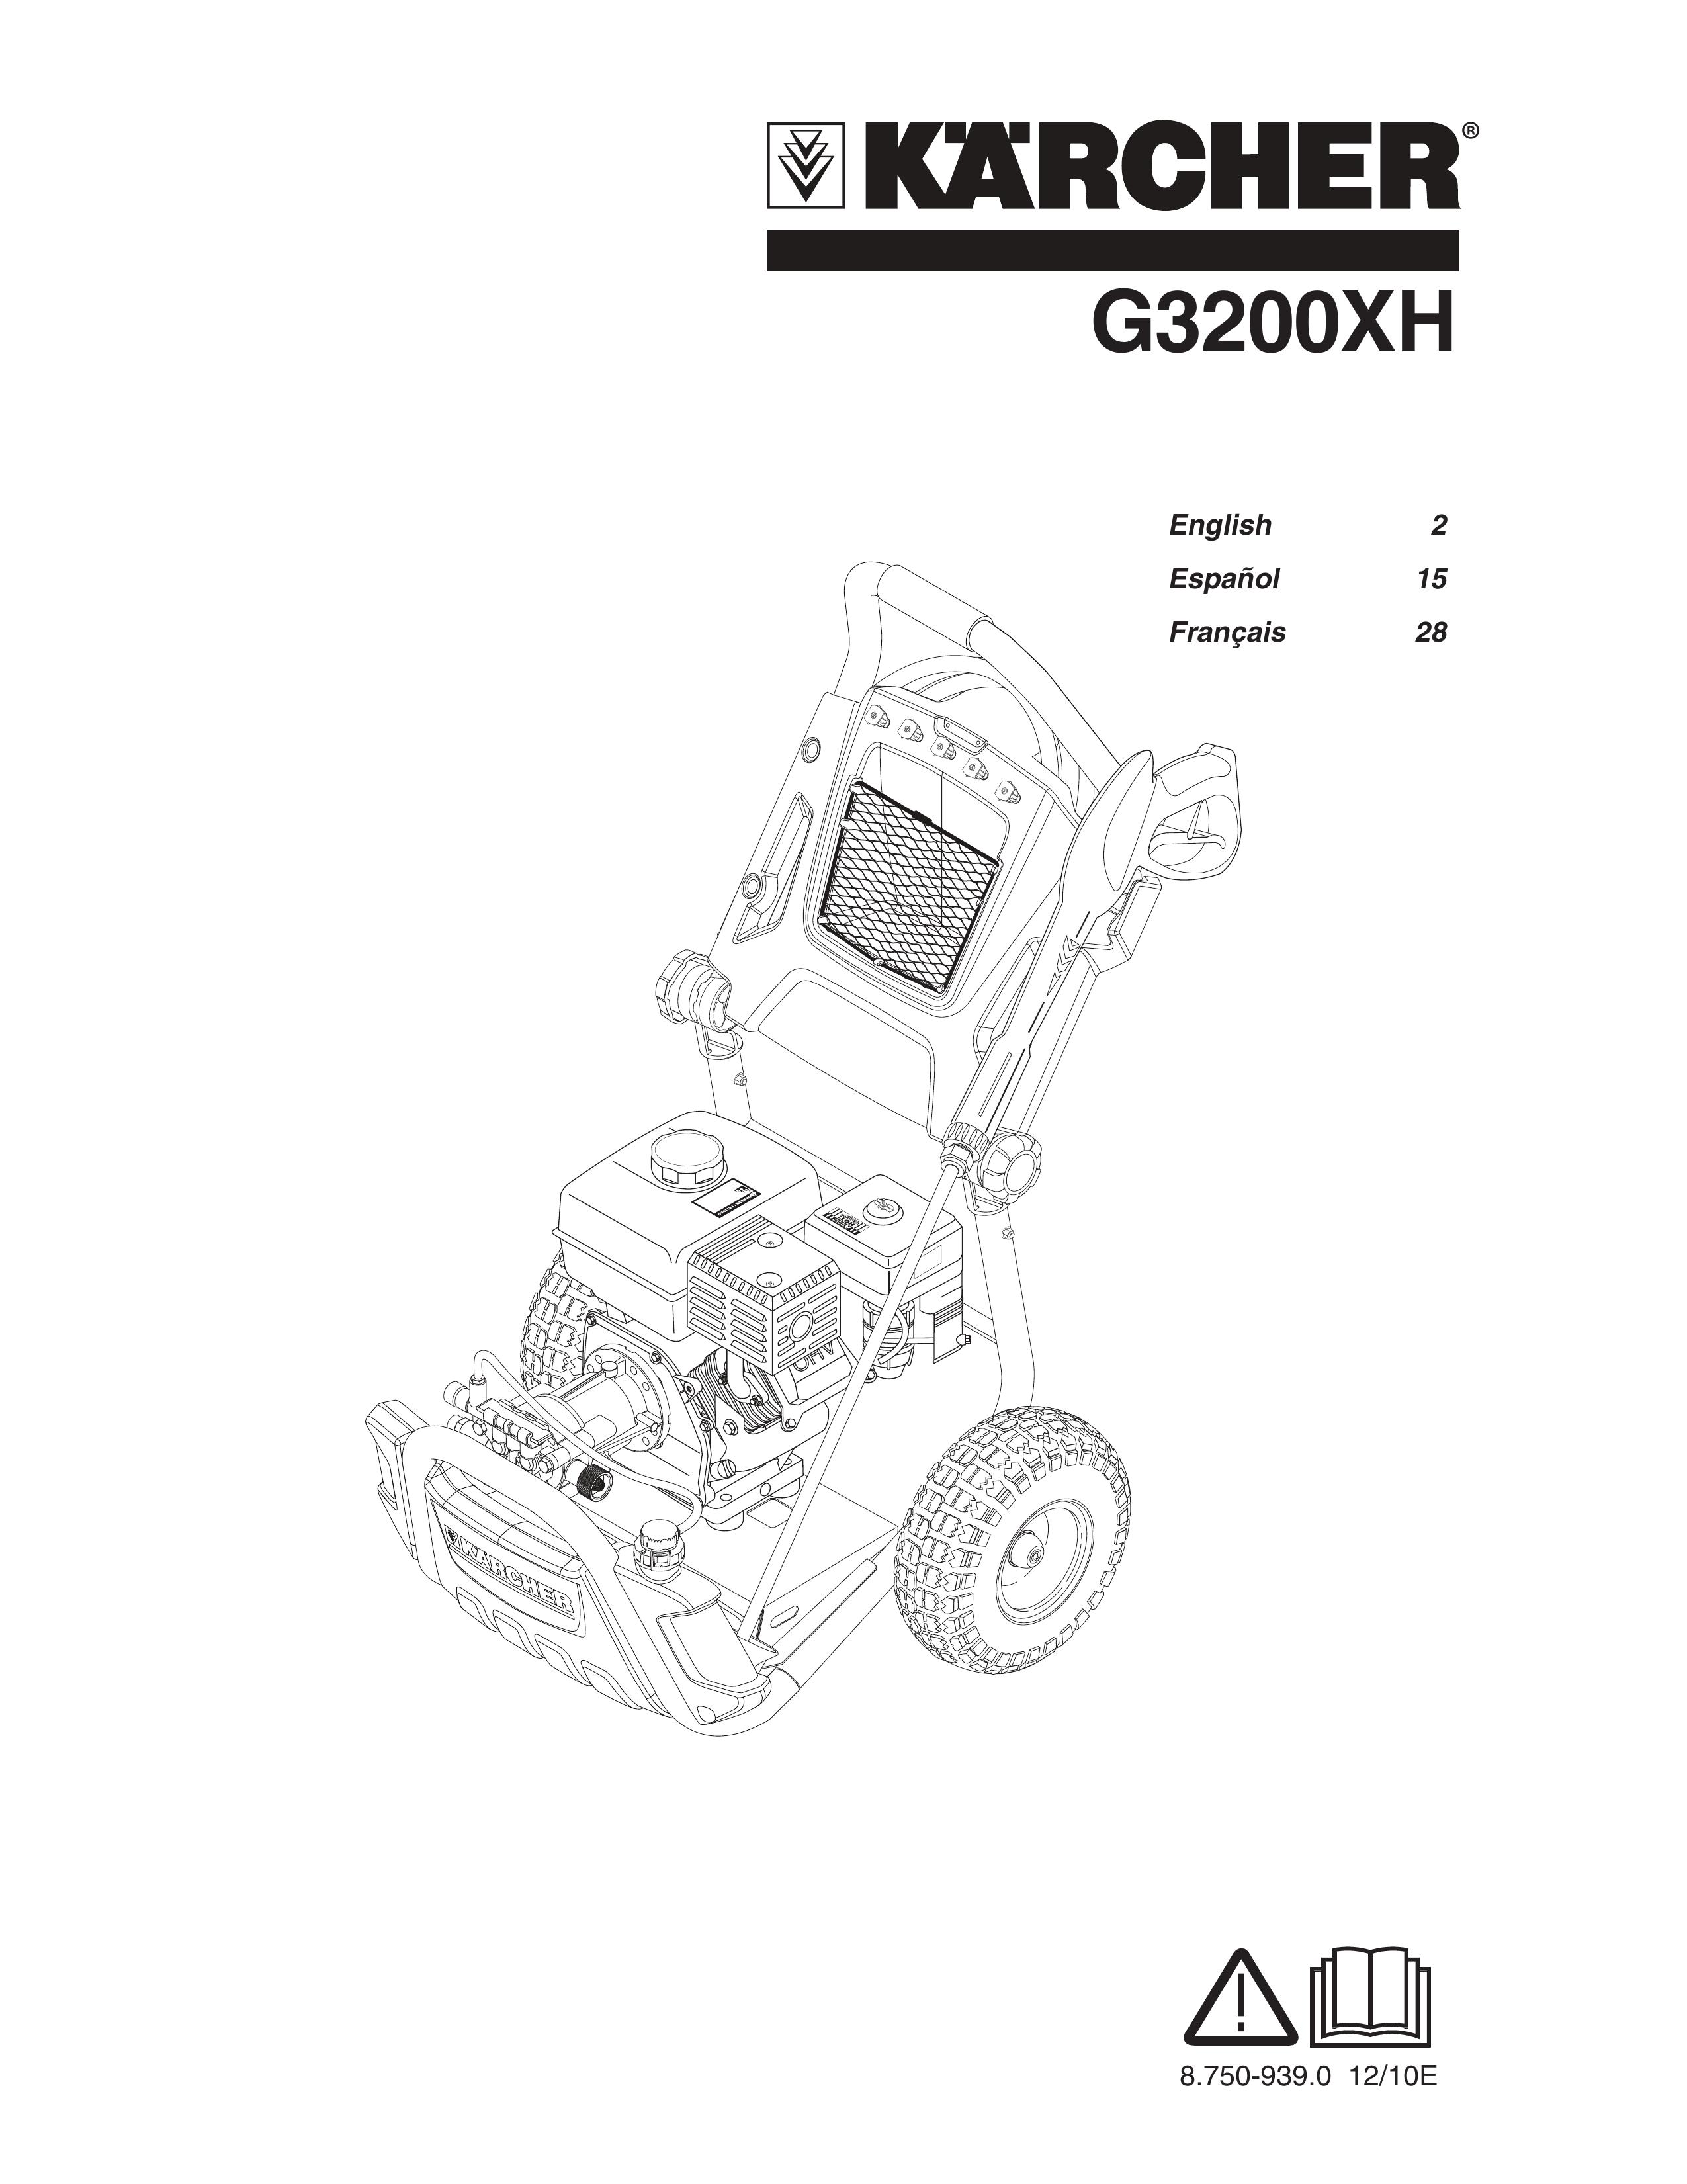 Karcher G3200XH Pressure Washer User Manual